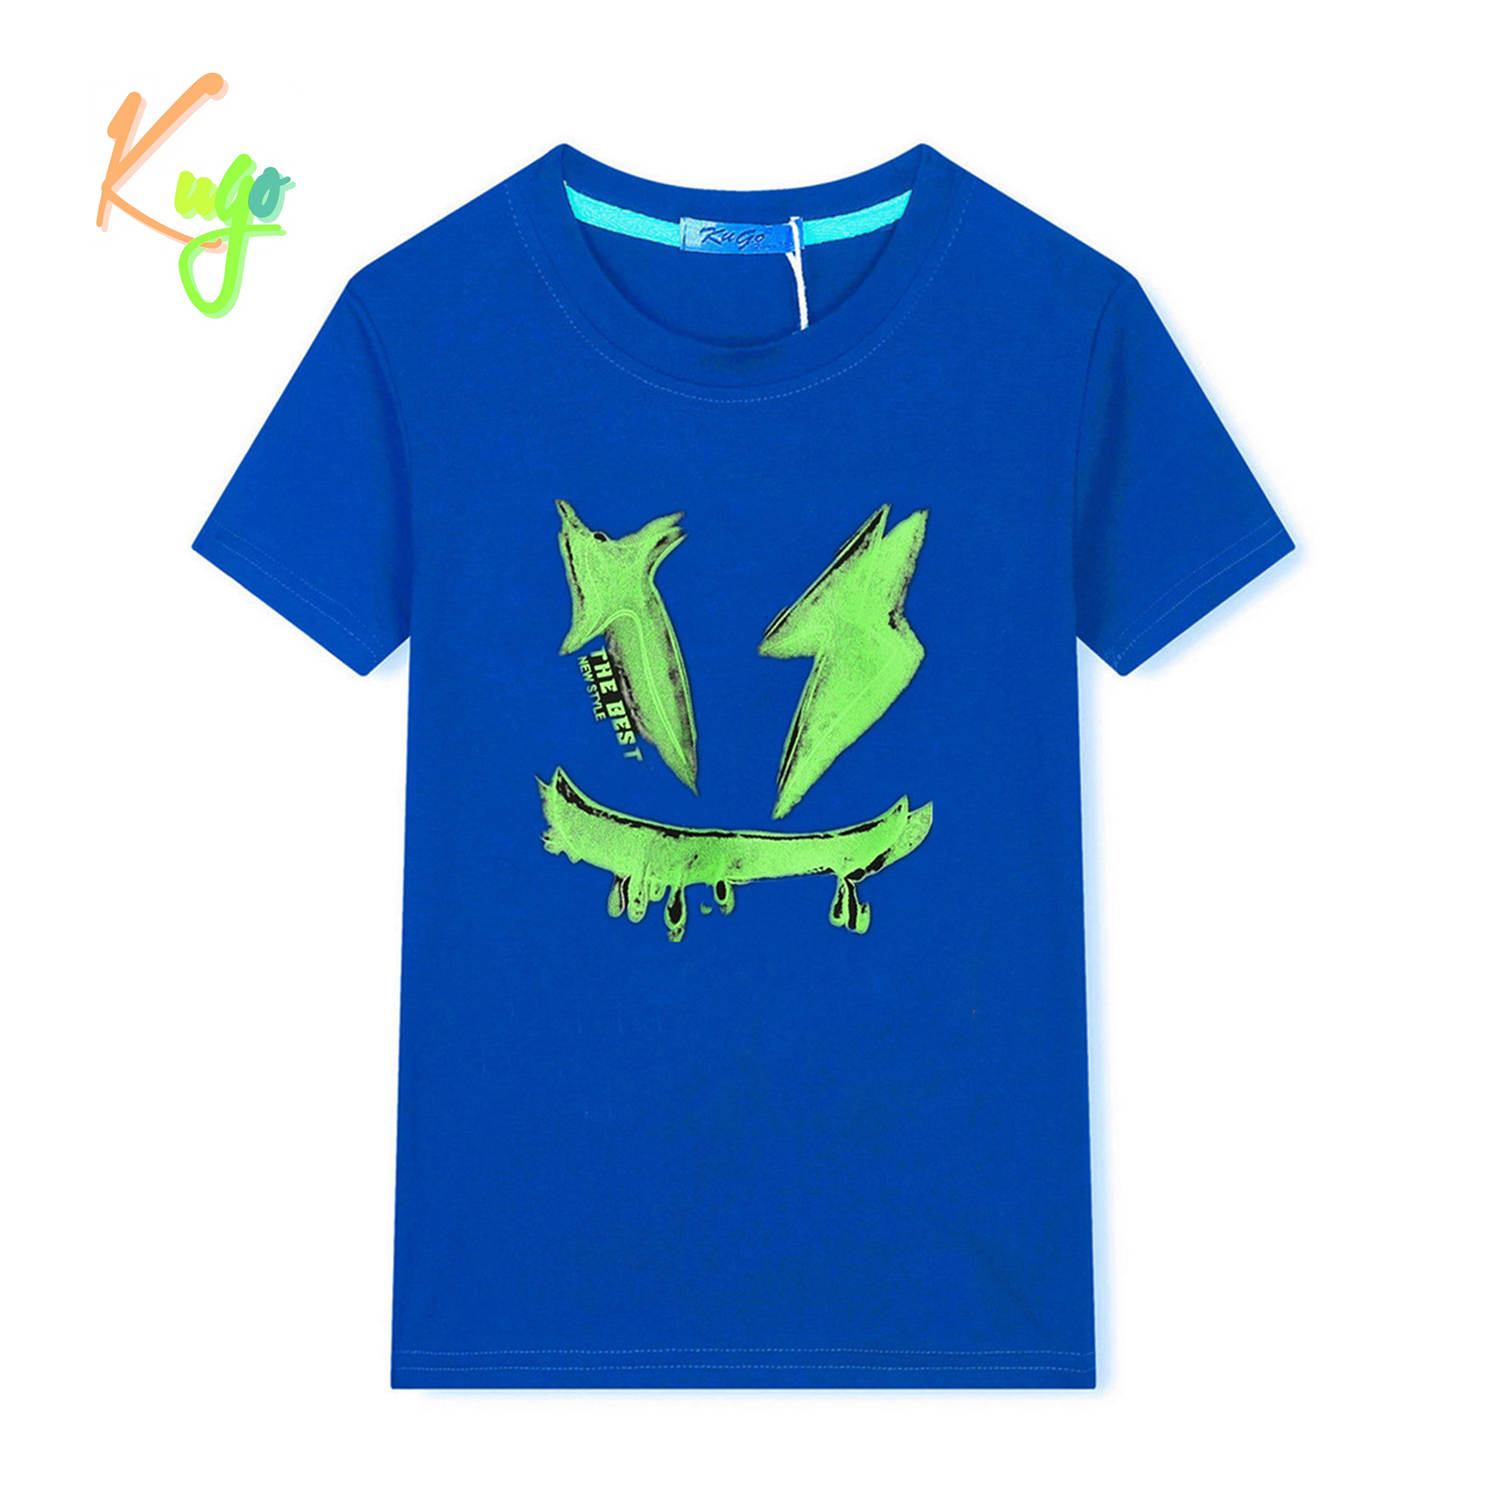 Chlapecké tričko - KUGO HC9292, modrá Barva: Modrá, Velikost: 164